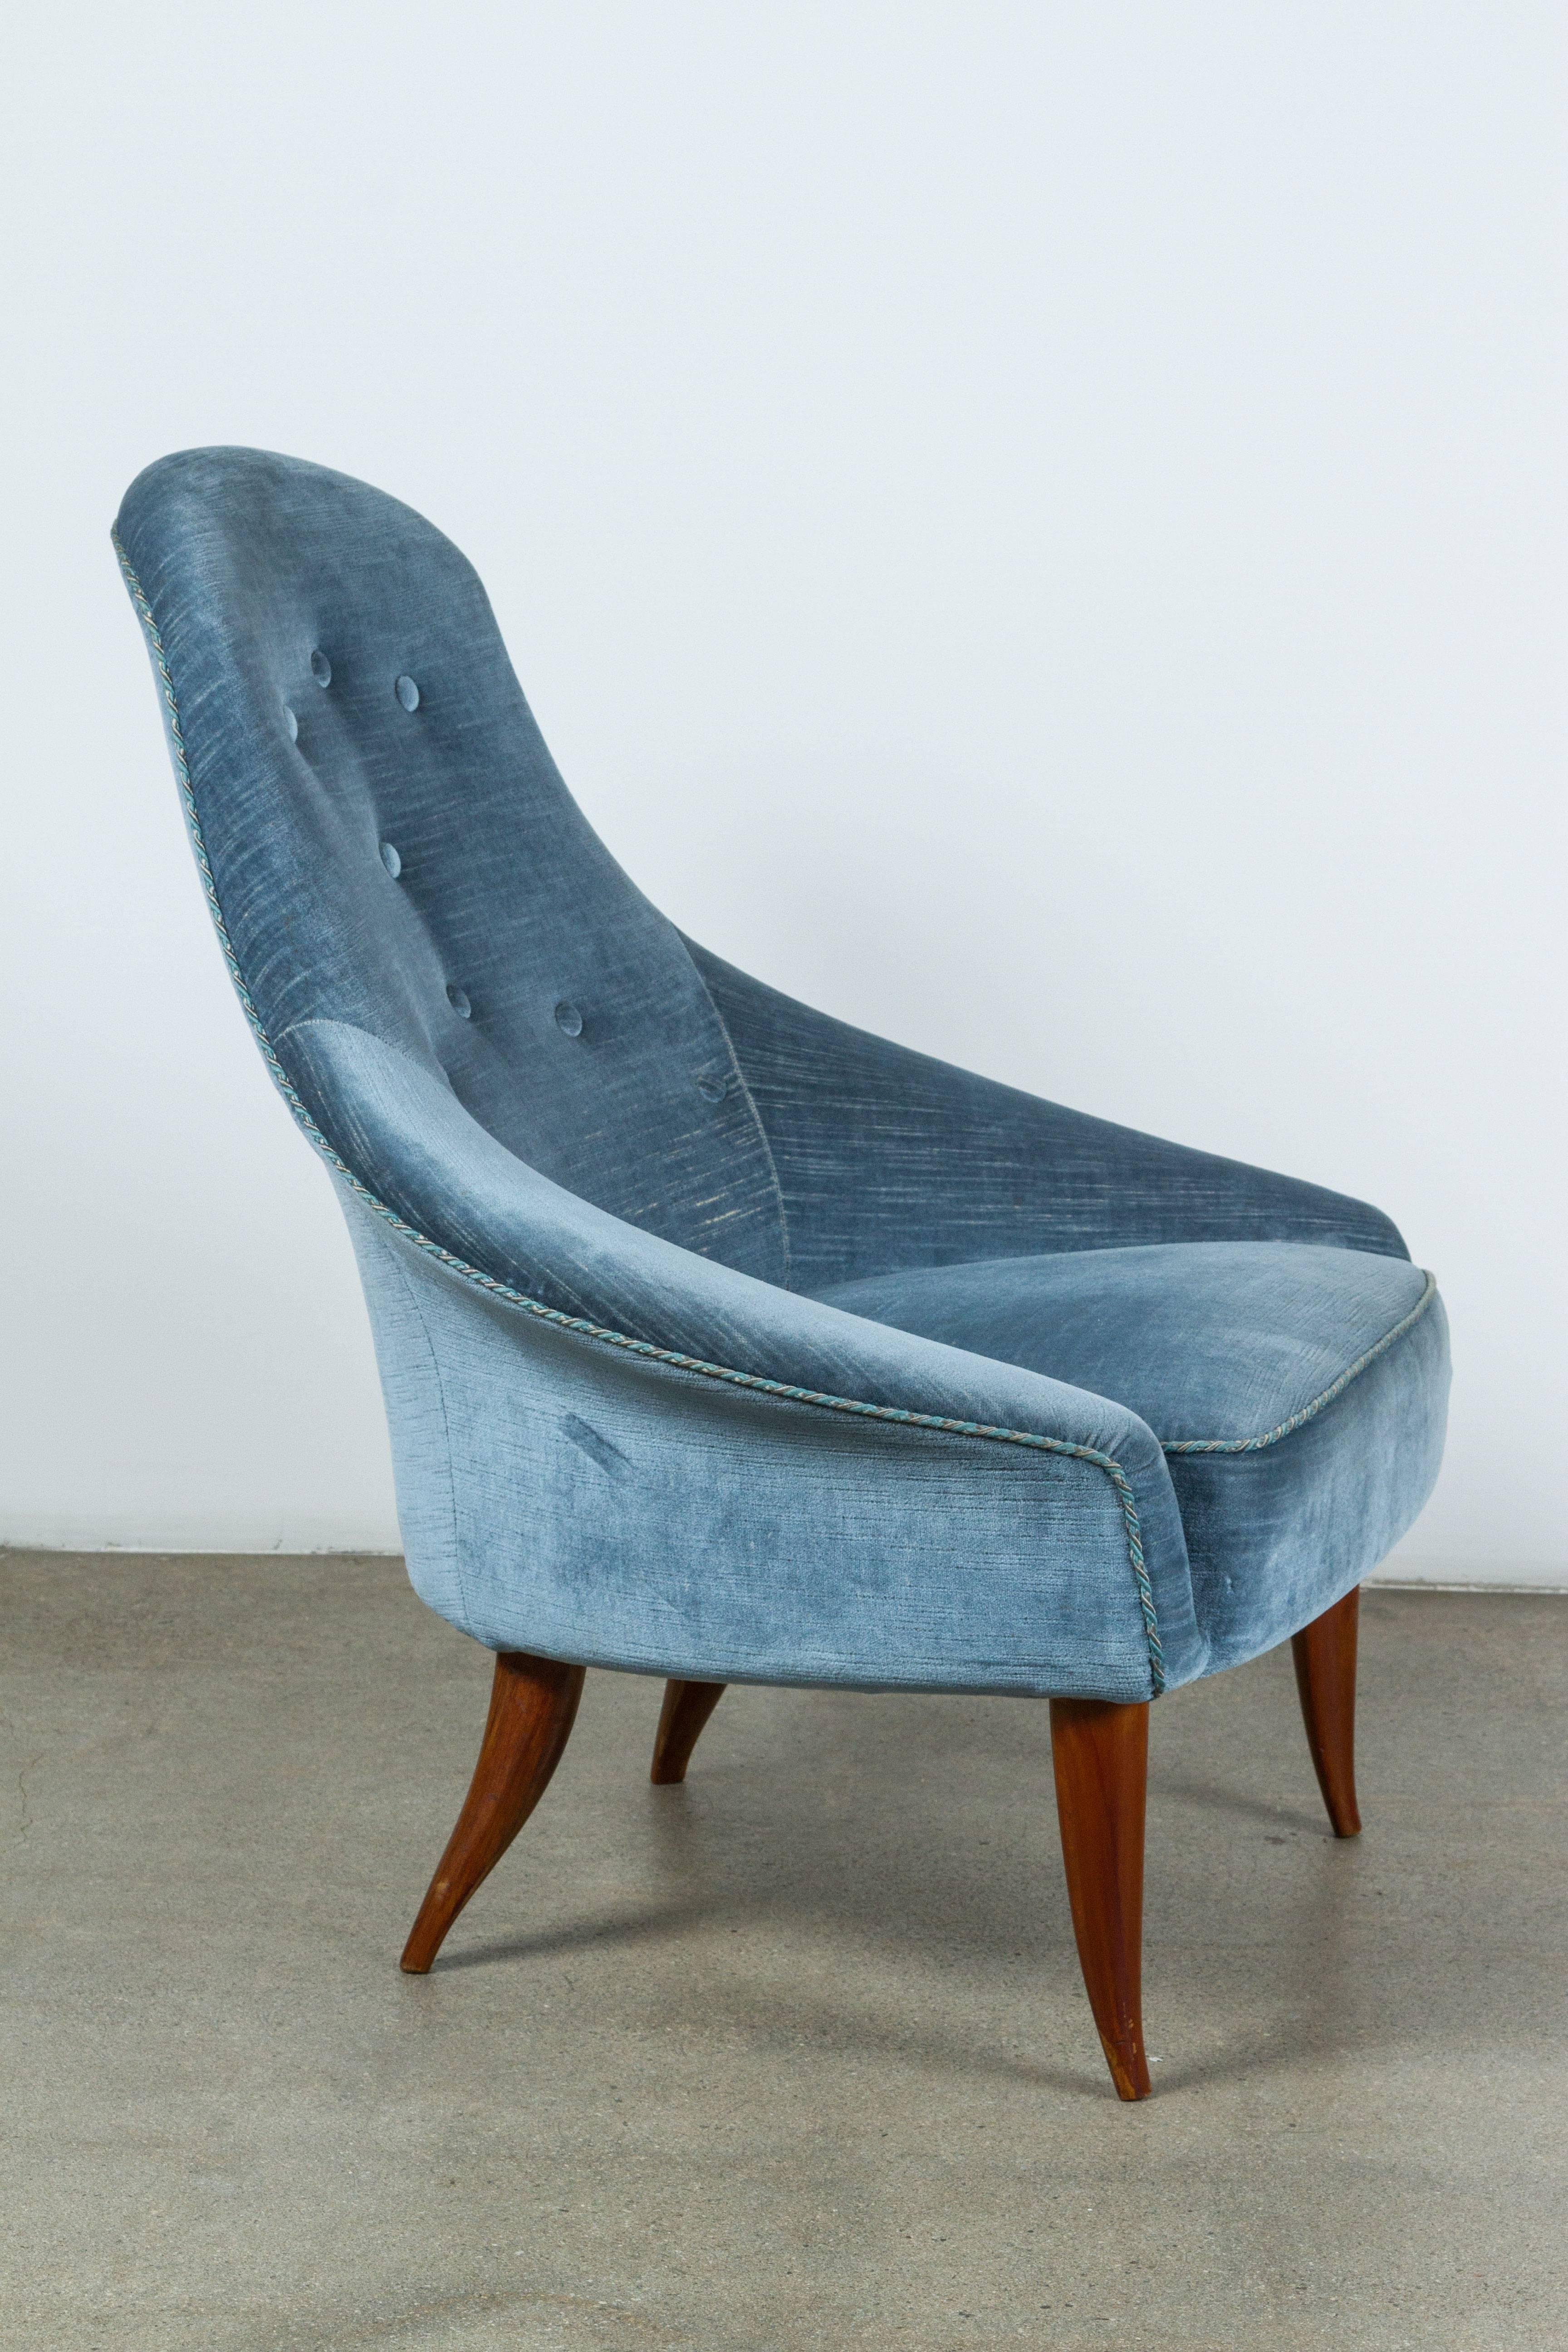 Elegant Eva chairs with original upholstery by Kerstin Hörlin-Holmquist for Nordiska Kompaniet. Made in Sweden, circa 1958.